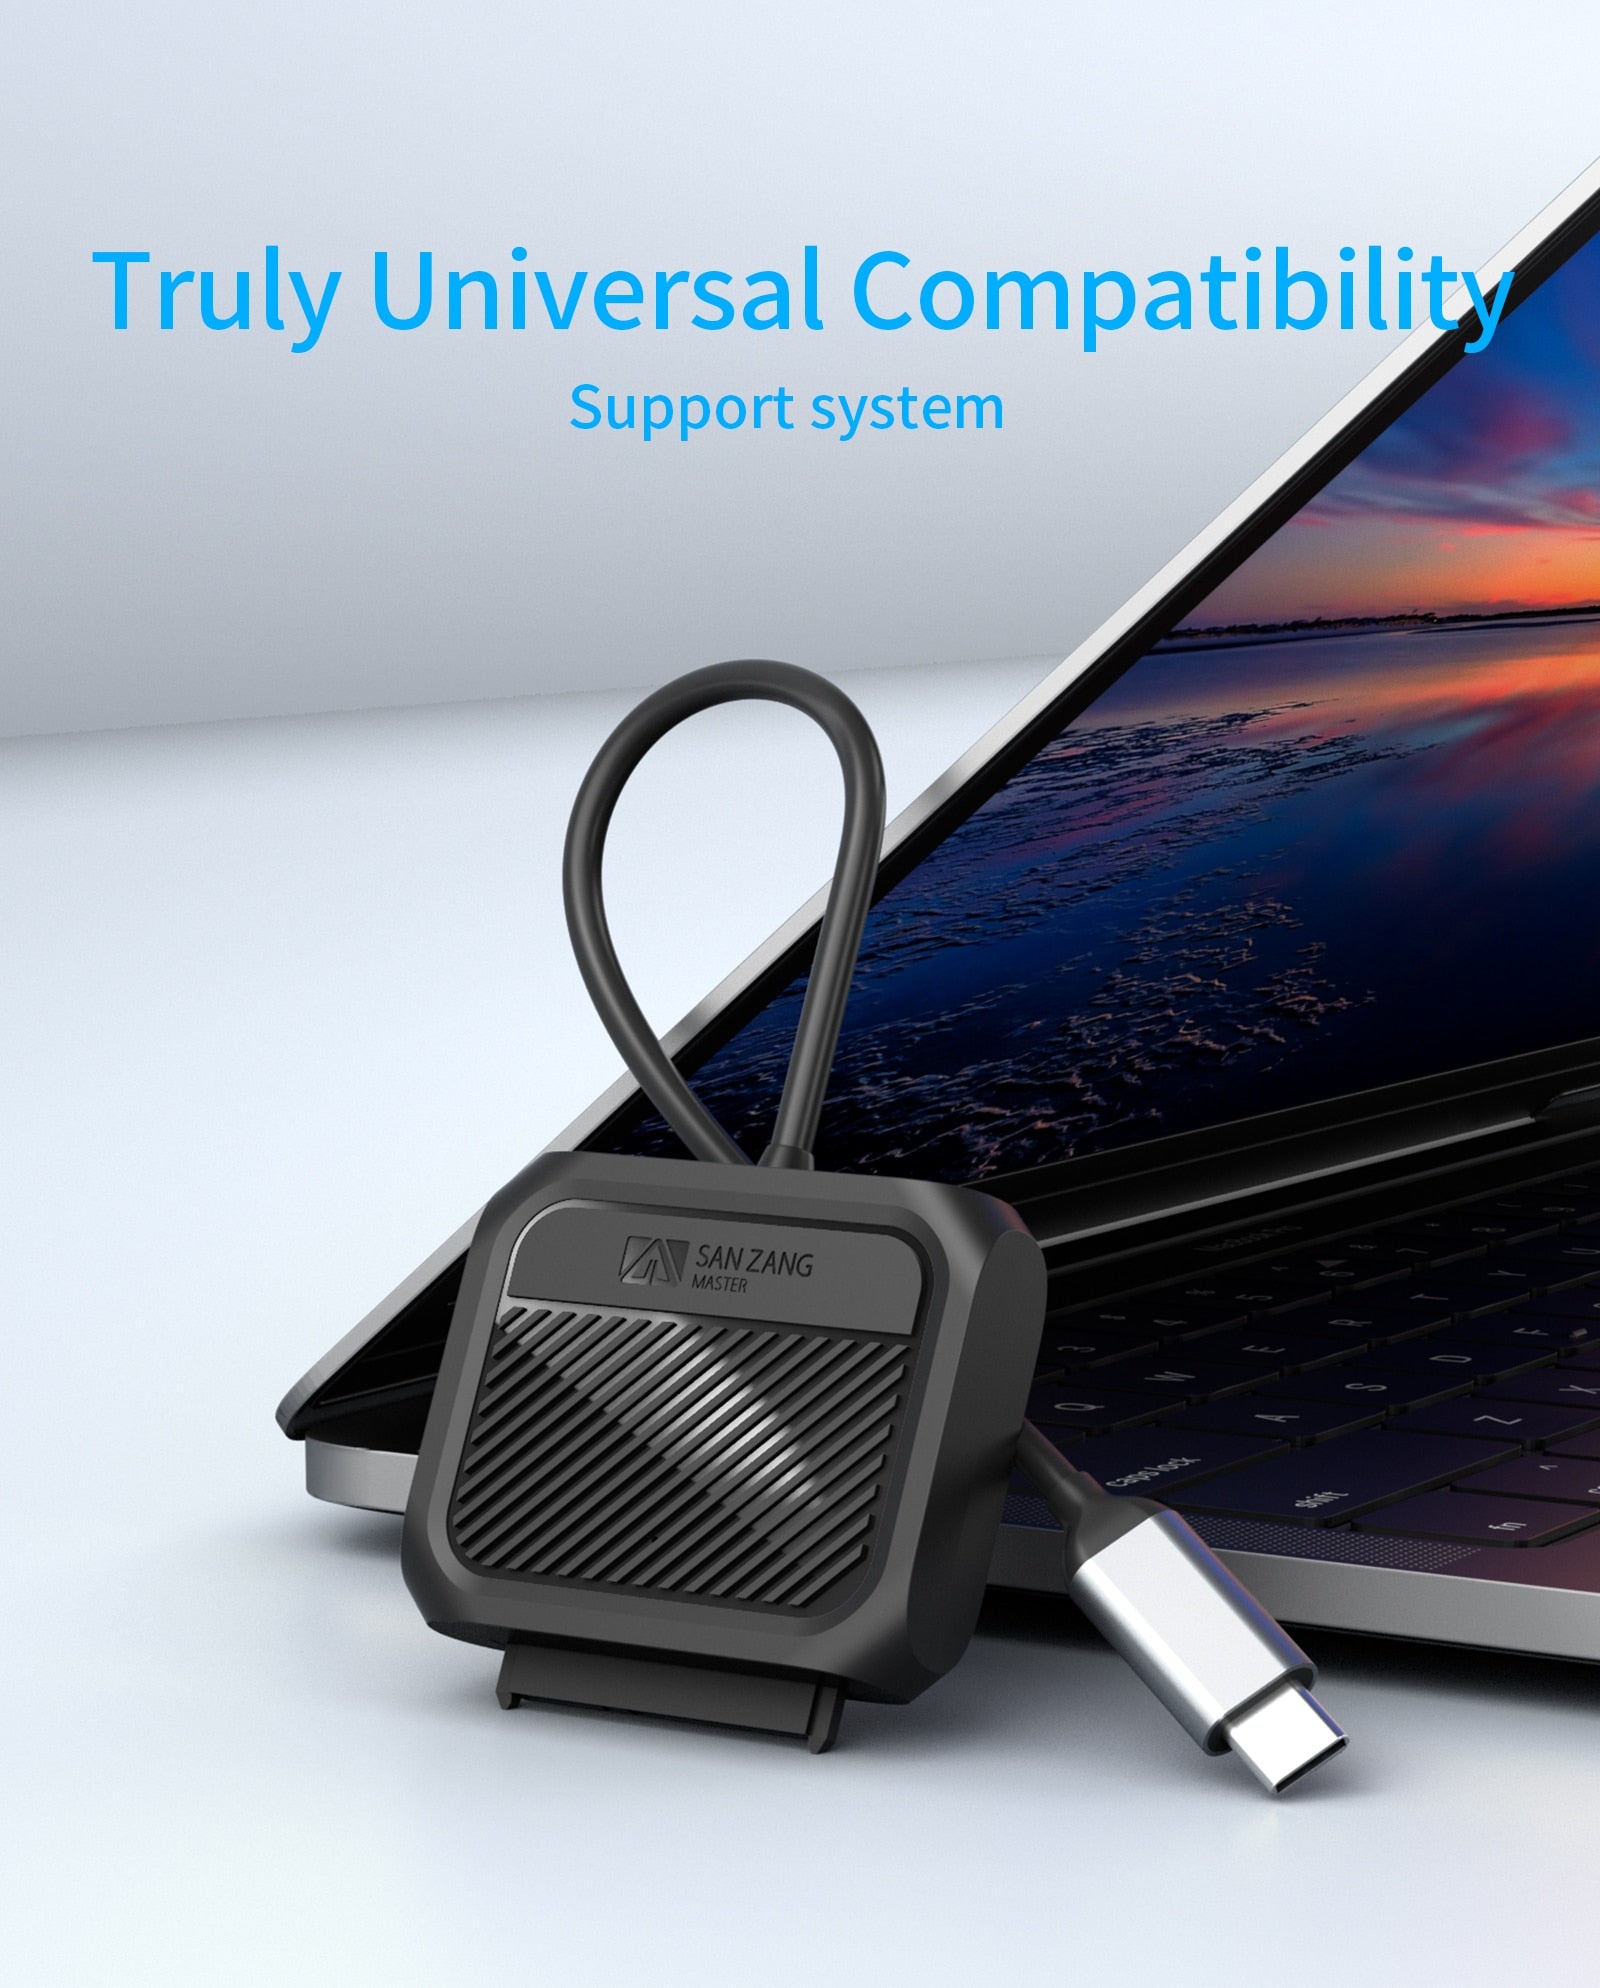 USB3.0 Hard Drive Adapter Cable SATA Converter 5Gbps Support 2.5'' /3.5'' SATA HDD/SSD External Hard Drive Disks adopt UASP